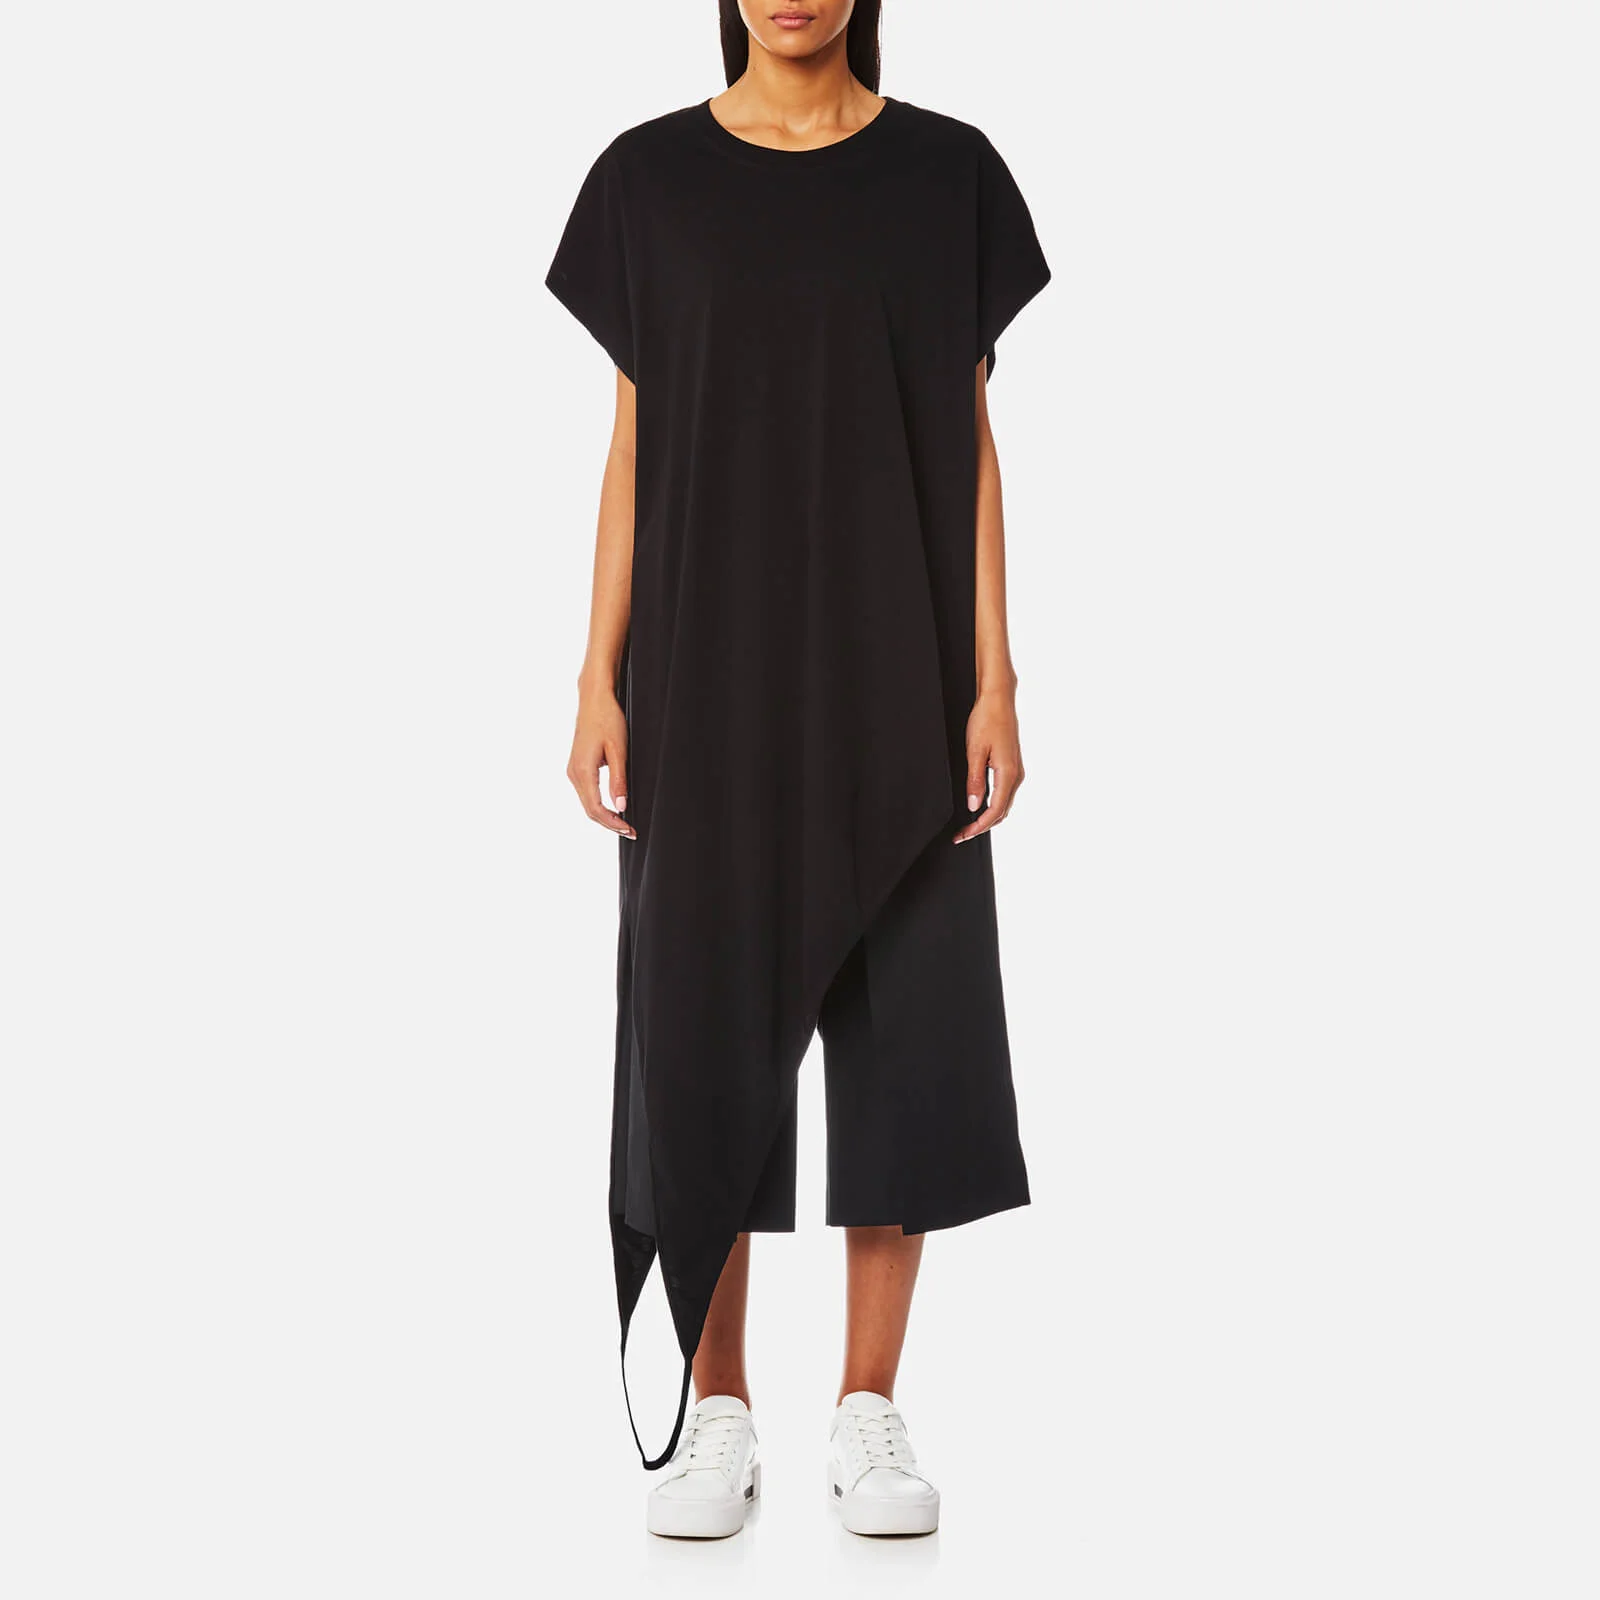 MM6 Maison Margiela Women's Asymmetric Long T-Shirt Dress - Black Image 1